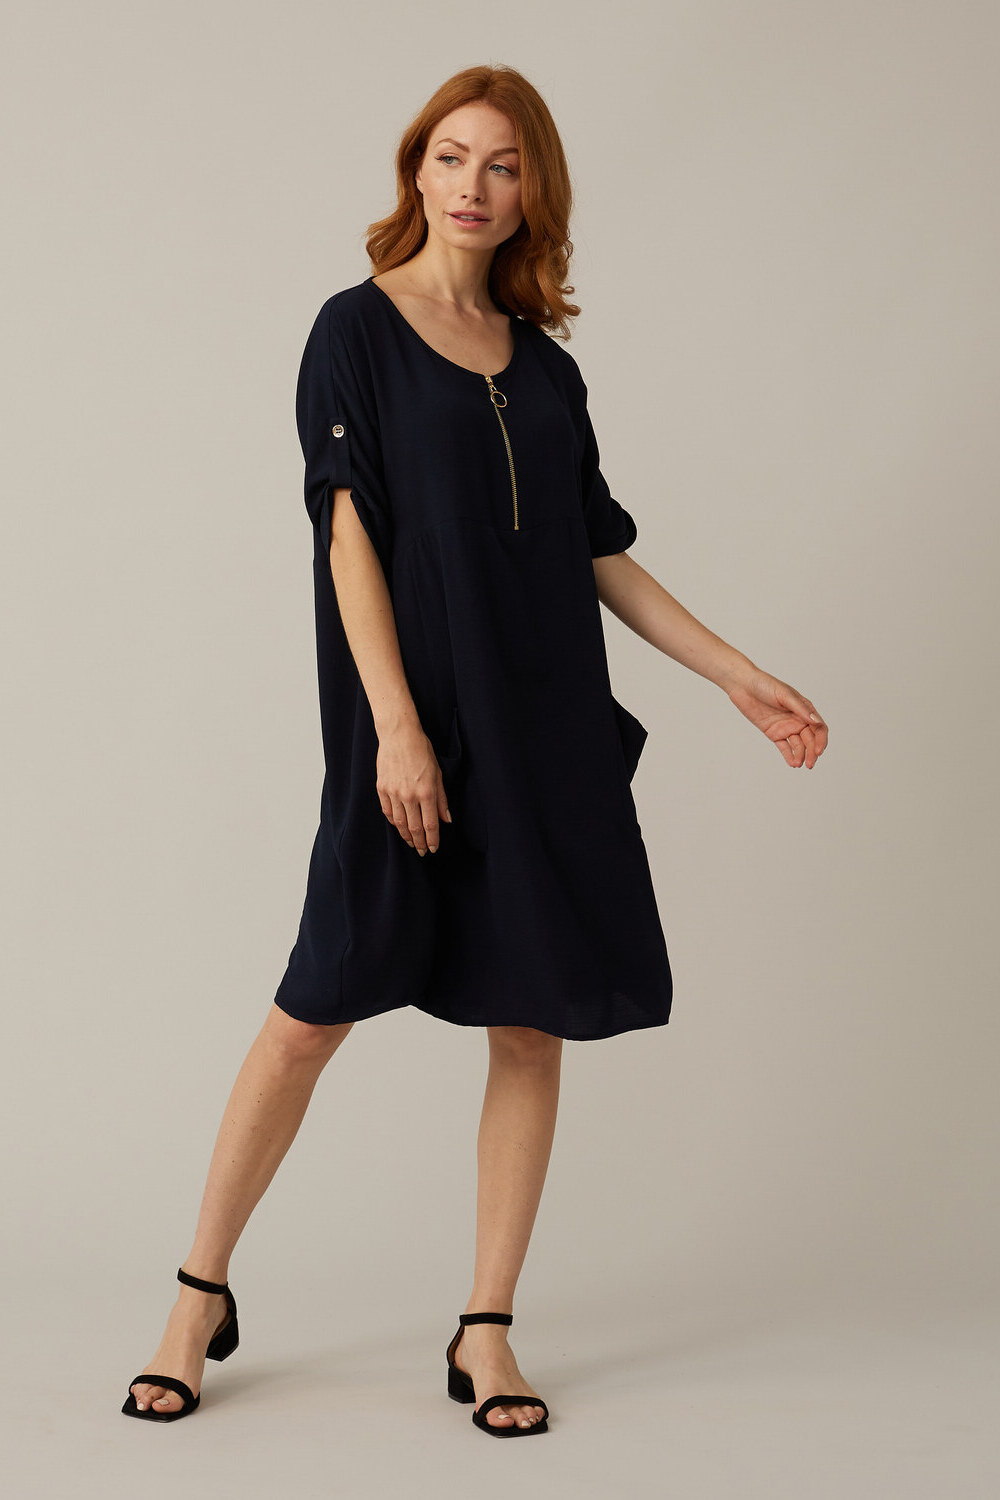 Joseph Ribkoff Zip Detail Dress Style 221164. Midnight Blue